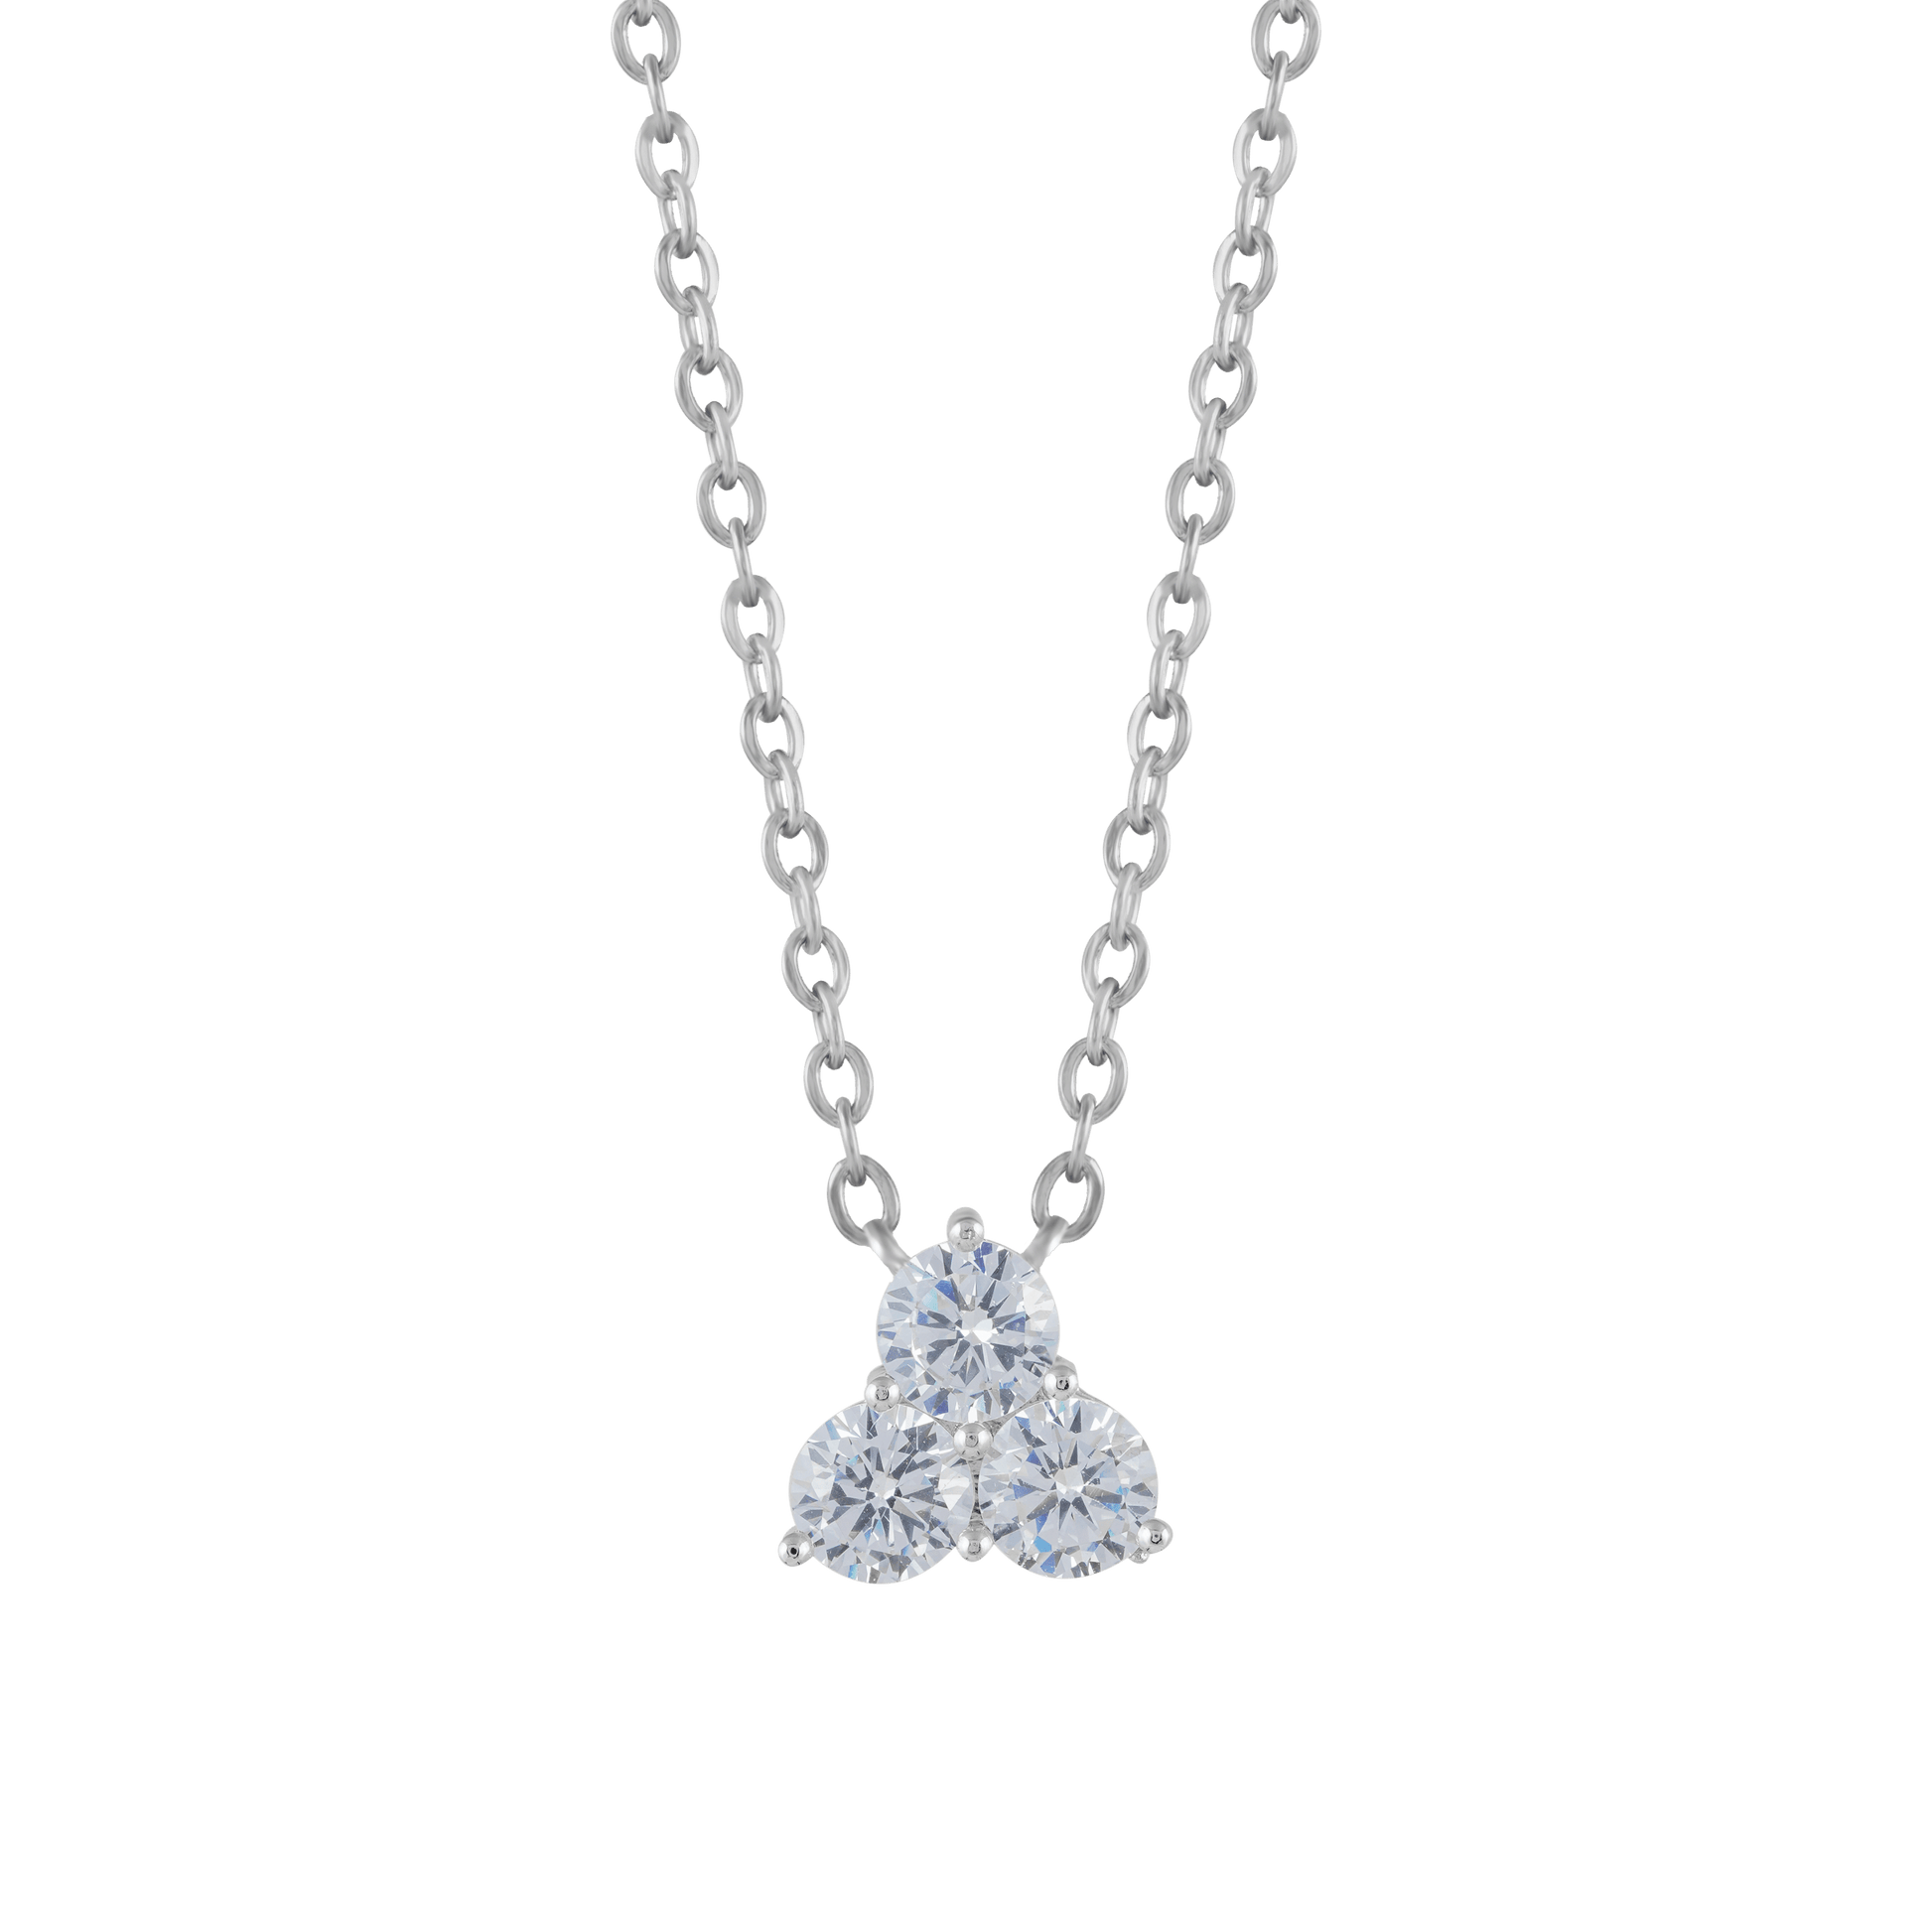 diamond pendant necklace PNG image